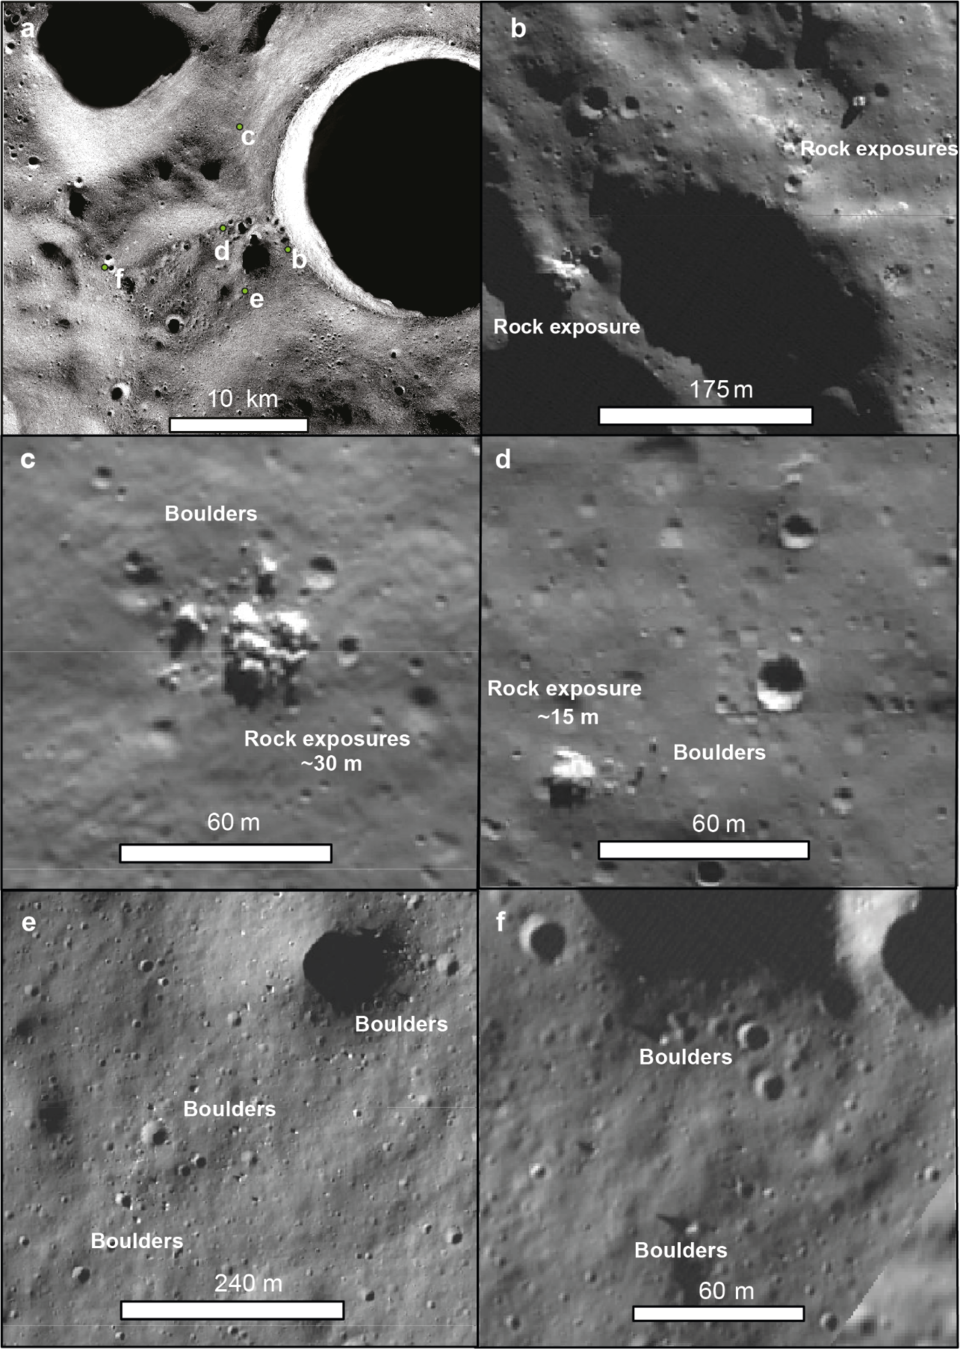 Boulders and rock exposures on the Moon for Artemis III